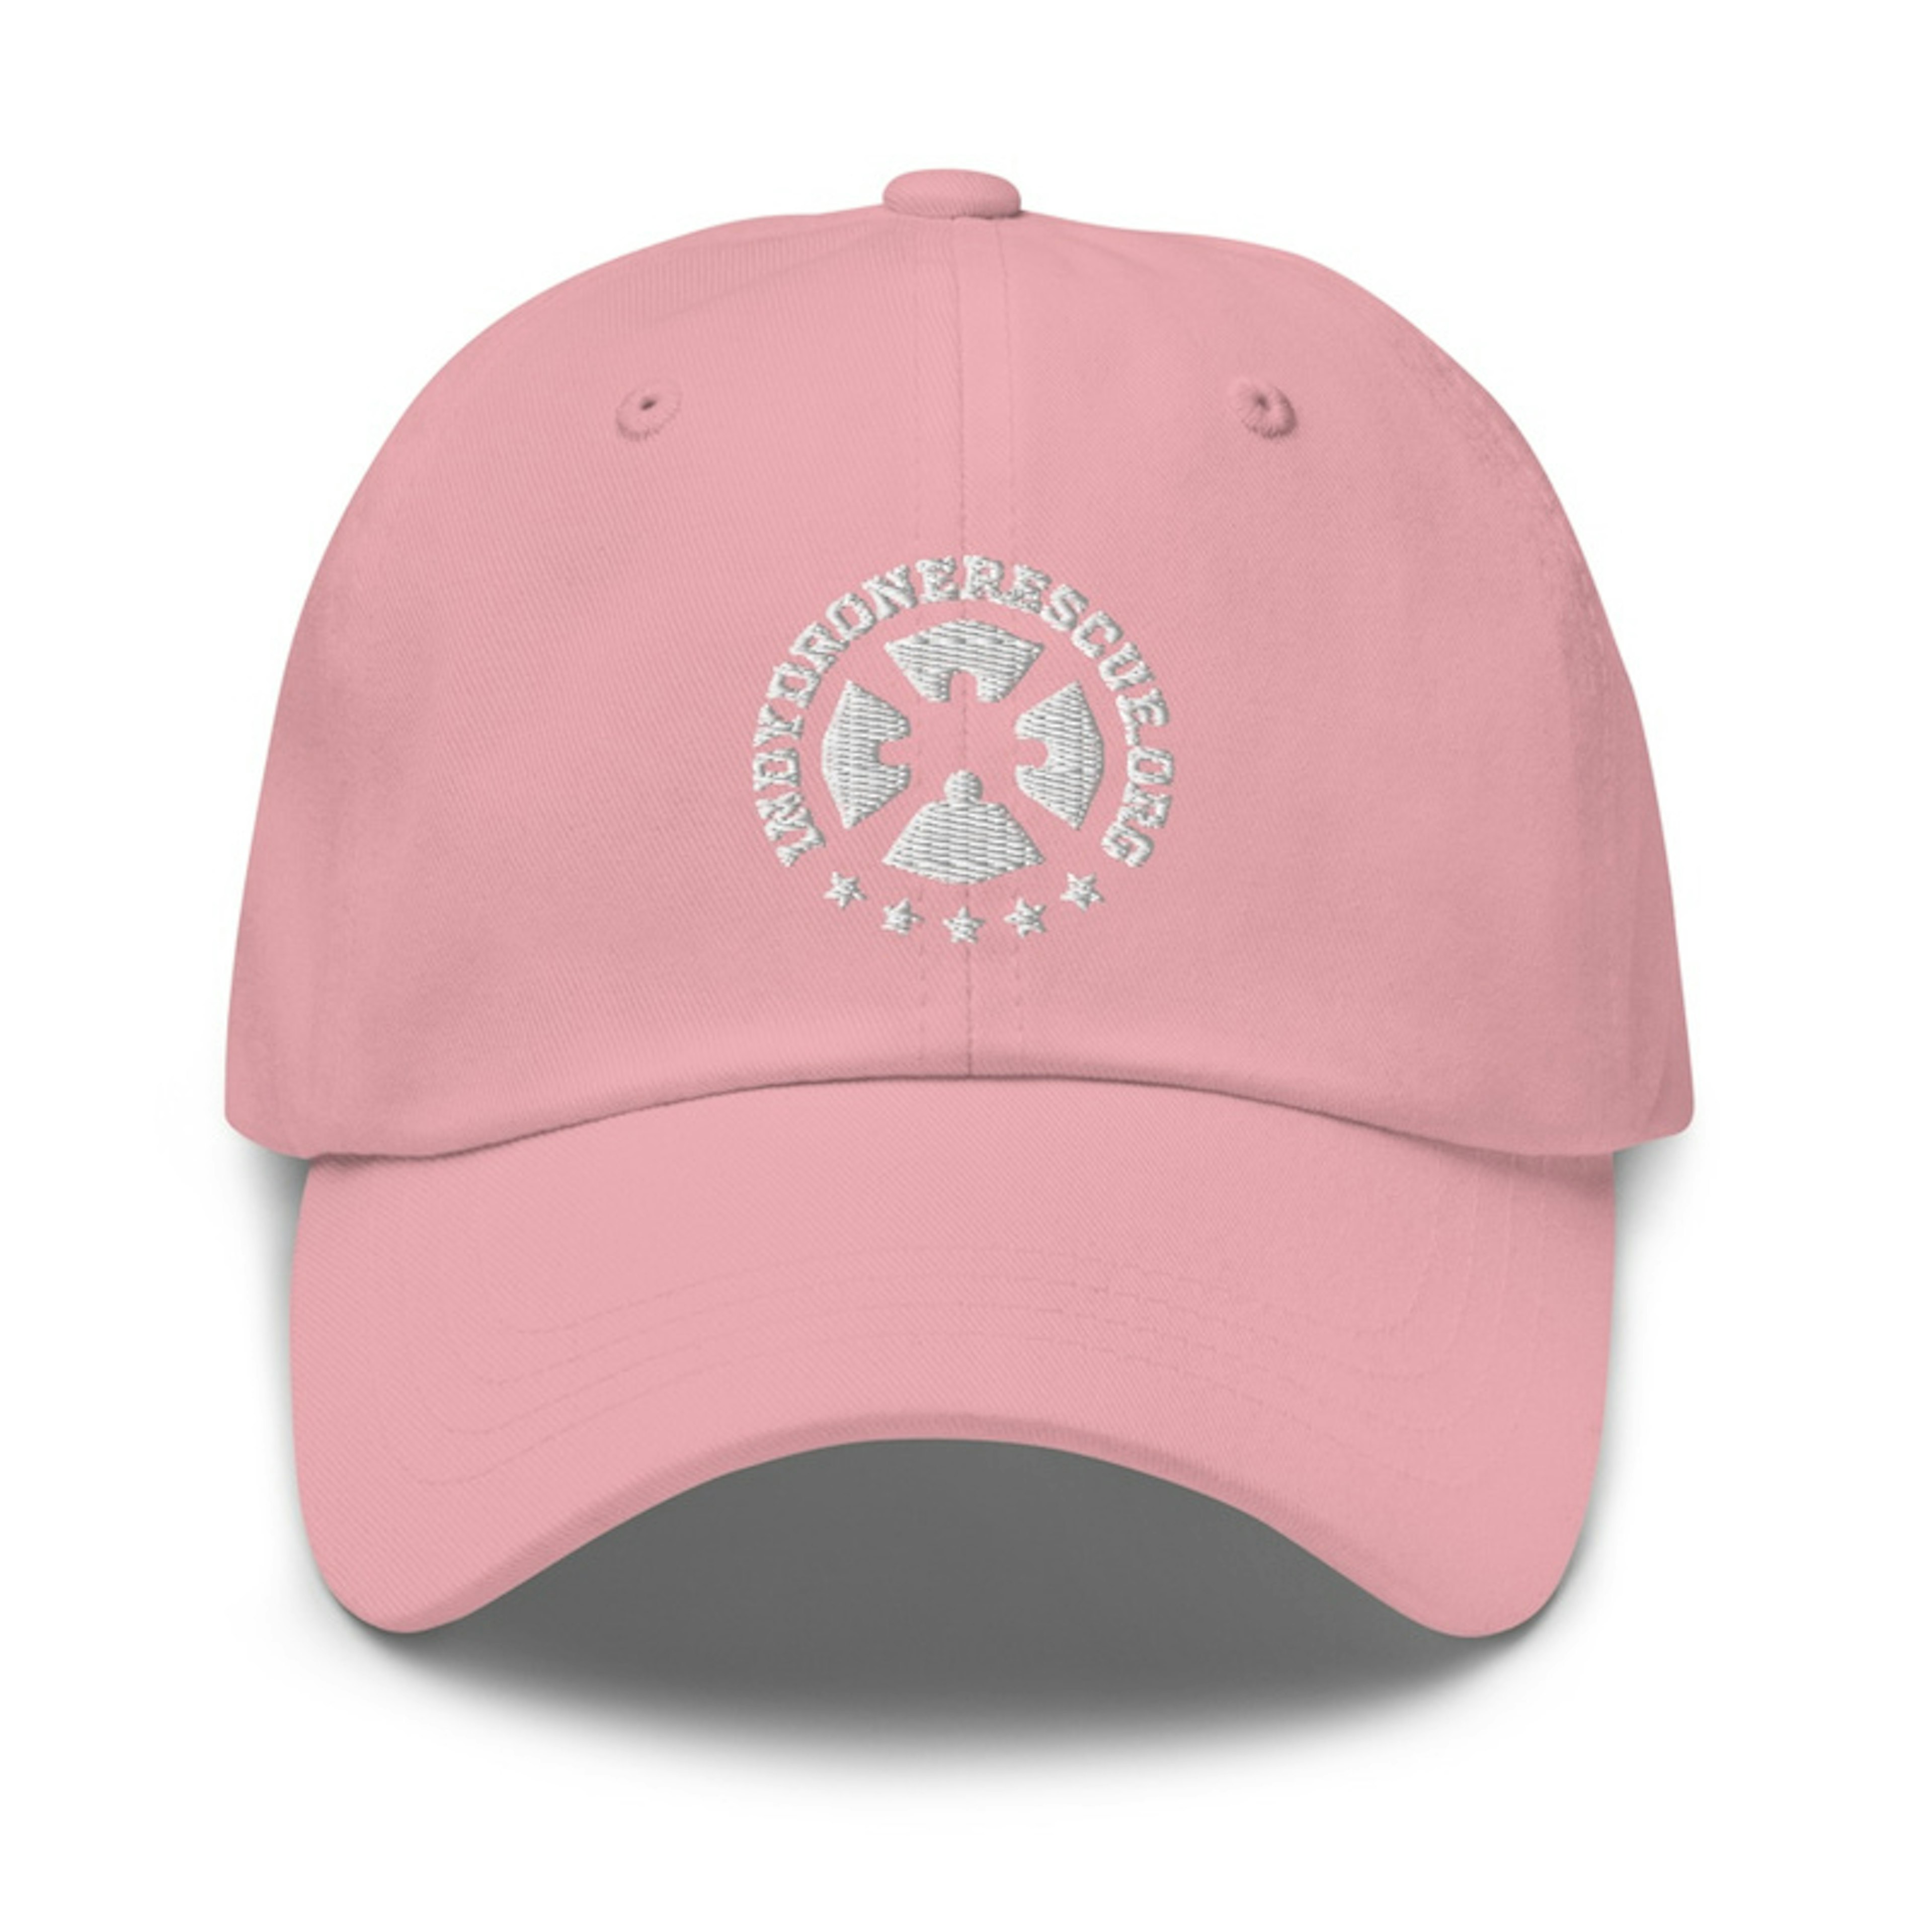 IDR Cap - Pink